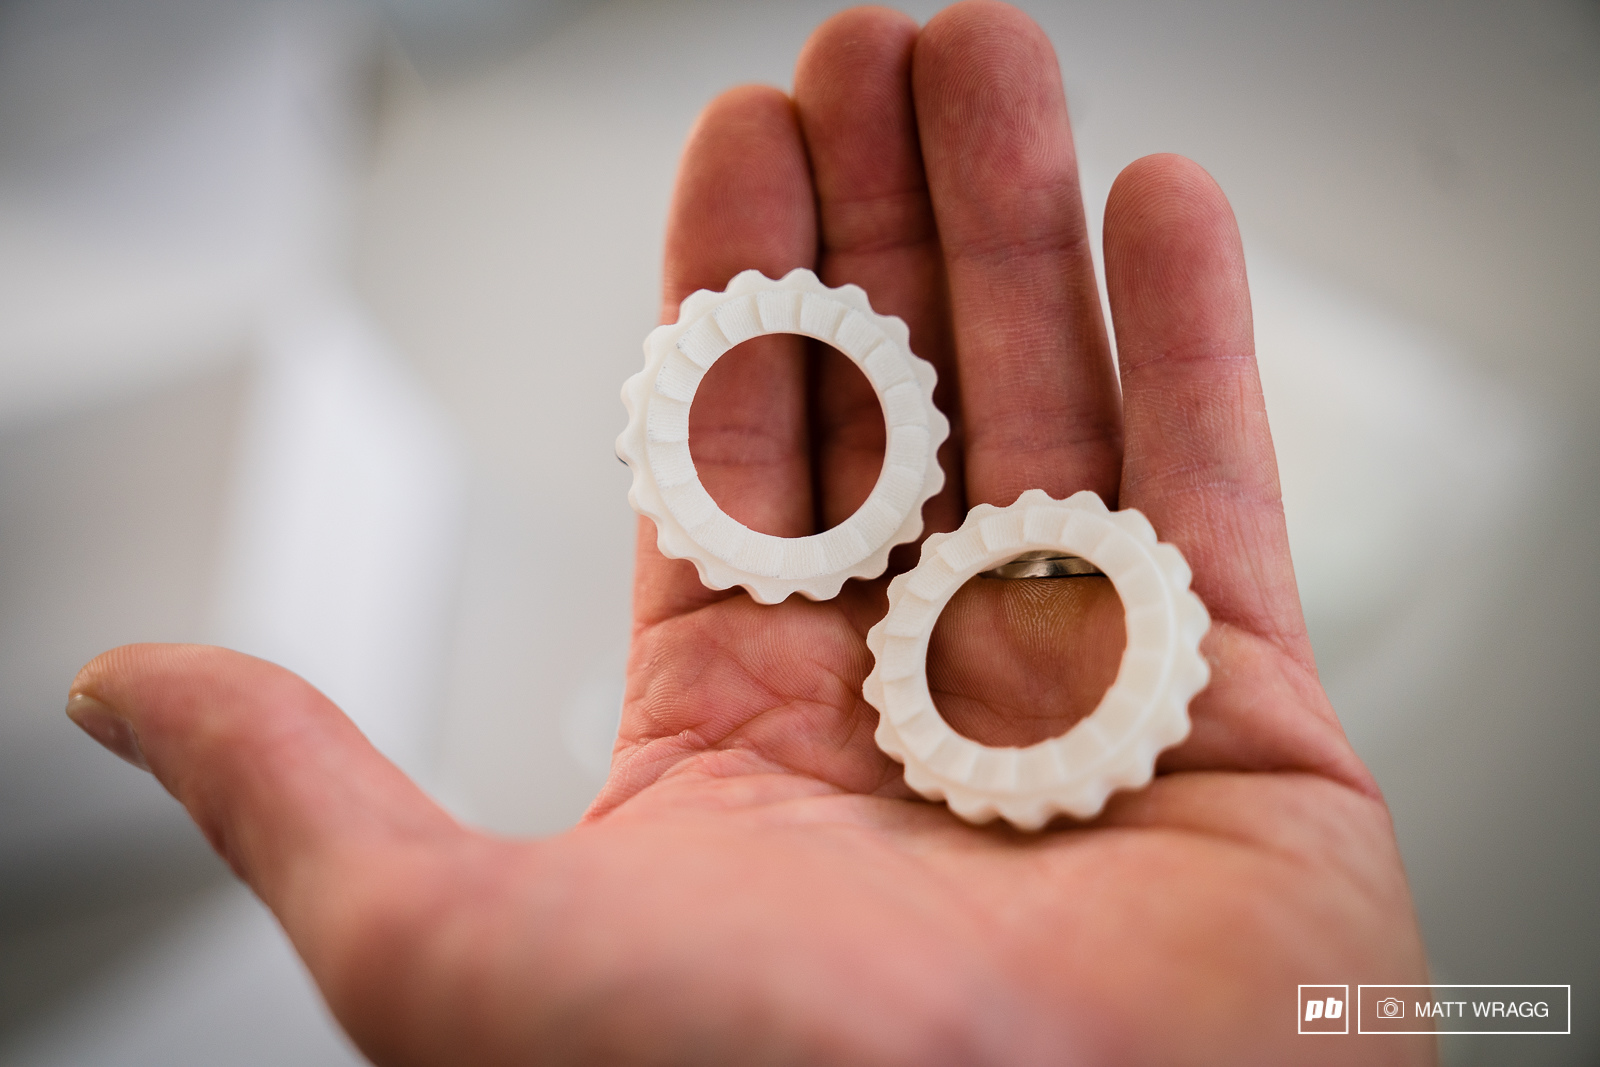 3D printed samples of the ratchet sytem.